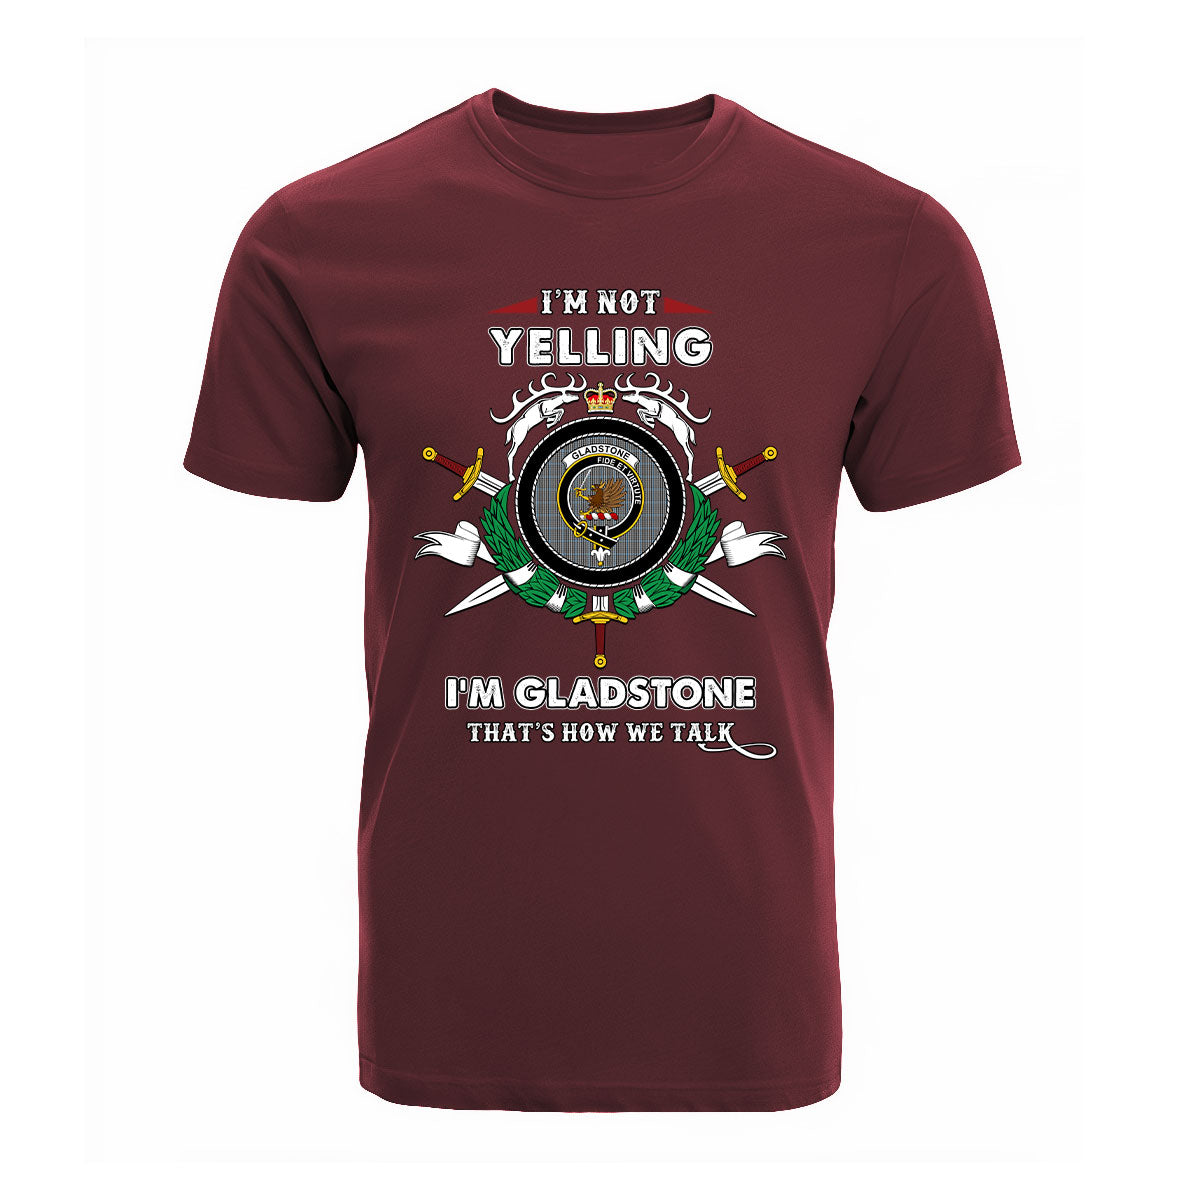 Gladstone Tartan Crest T-shirt - I'm not yelling style